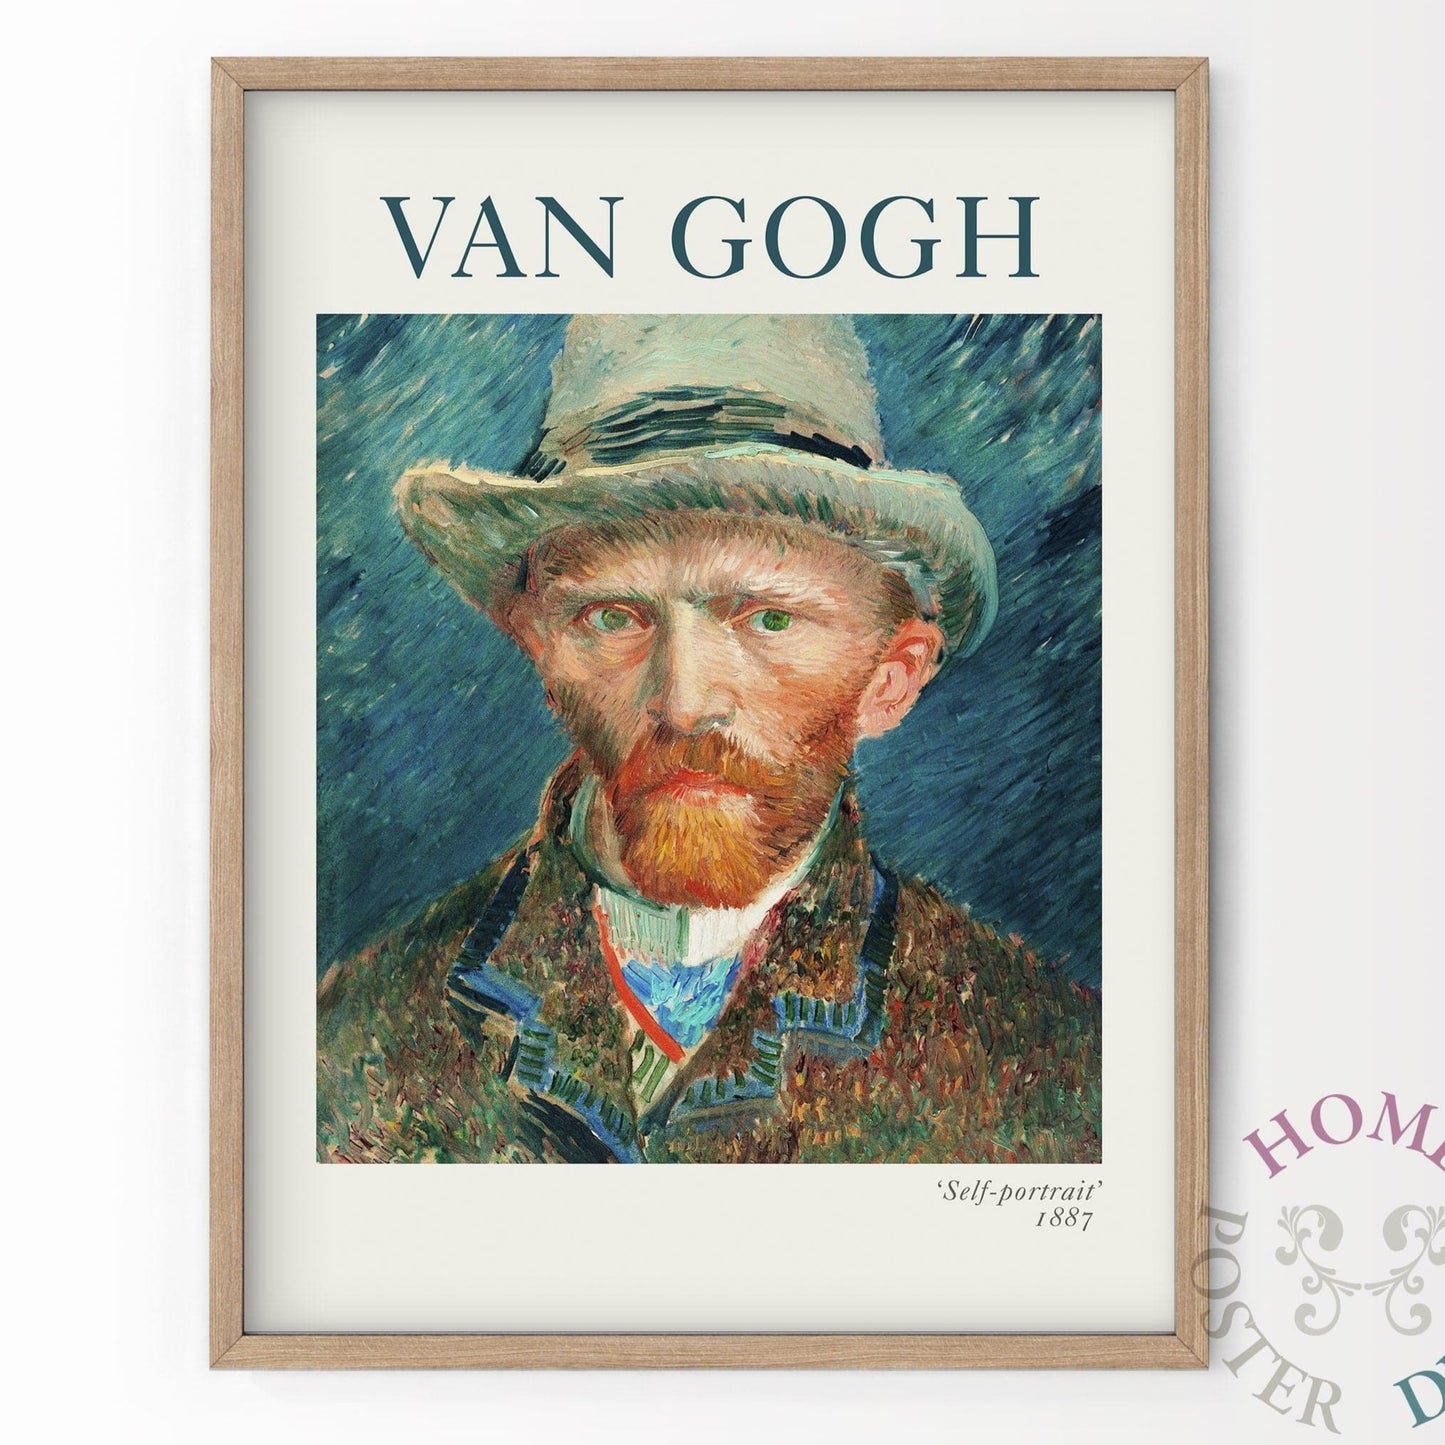 Home Poster Decor Van Gogh Poster, Self Portrait Wall Art, Van Gogh Print, Classic Painting, Post-impressionist Painter, Self-portrait (1887)